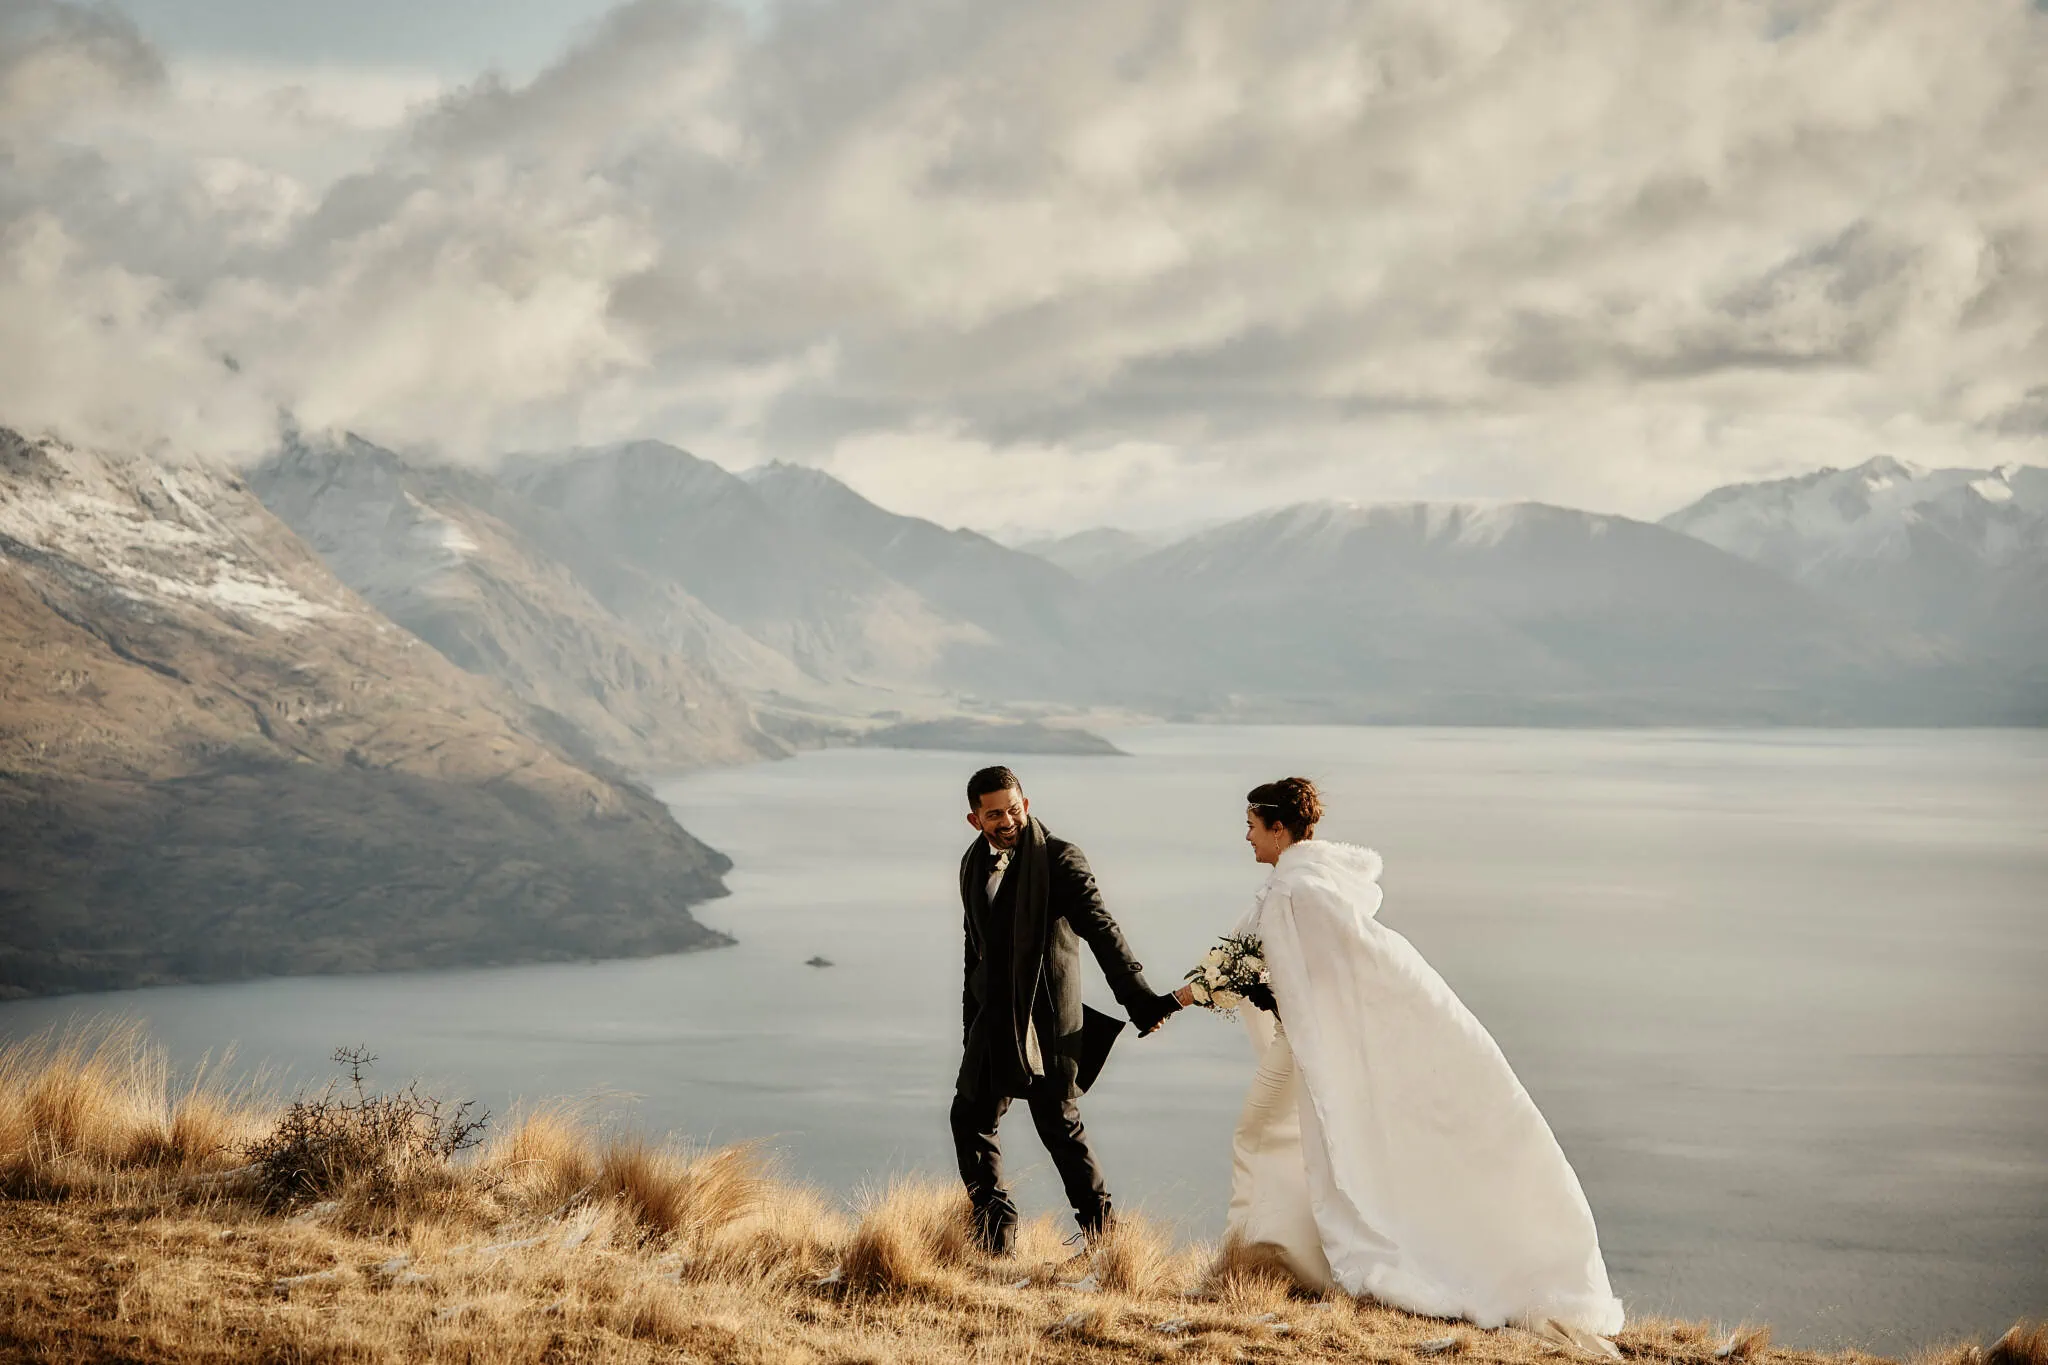 Queenstown New Zealand Elopement Wedding Photographer - Wasim and Yumn's Queenstown Islamic wedding atop a hill overlooking Lake Wanaka.